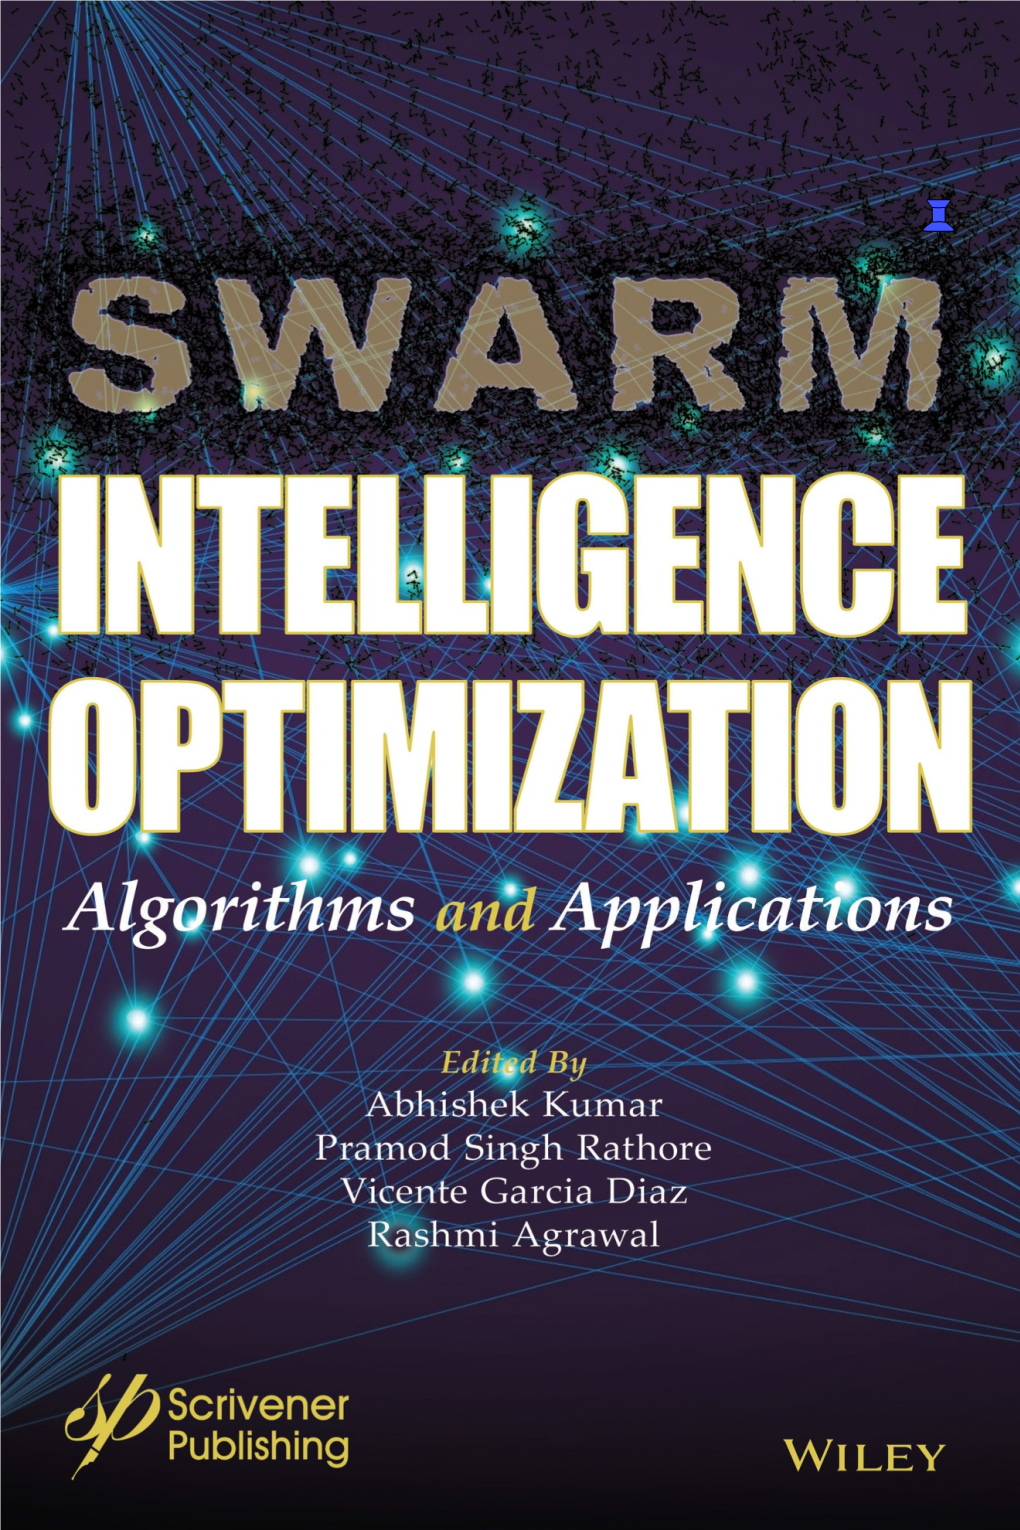 Swarm Intelligence Optimization Algorithms and Applications